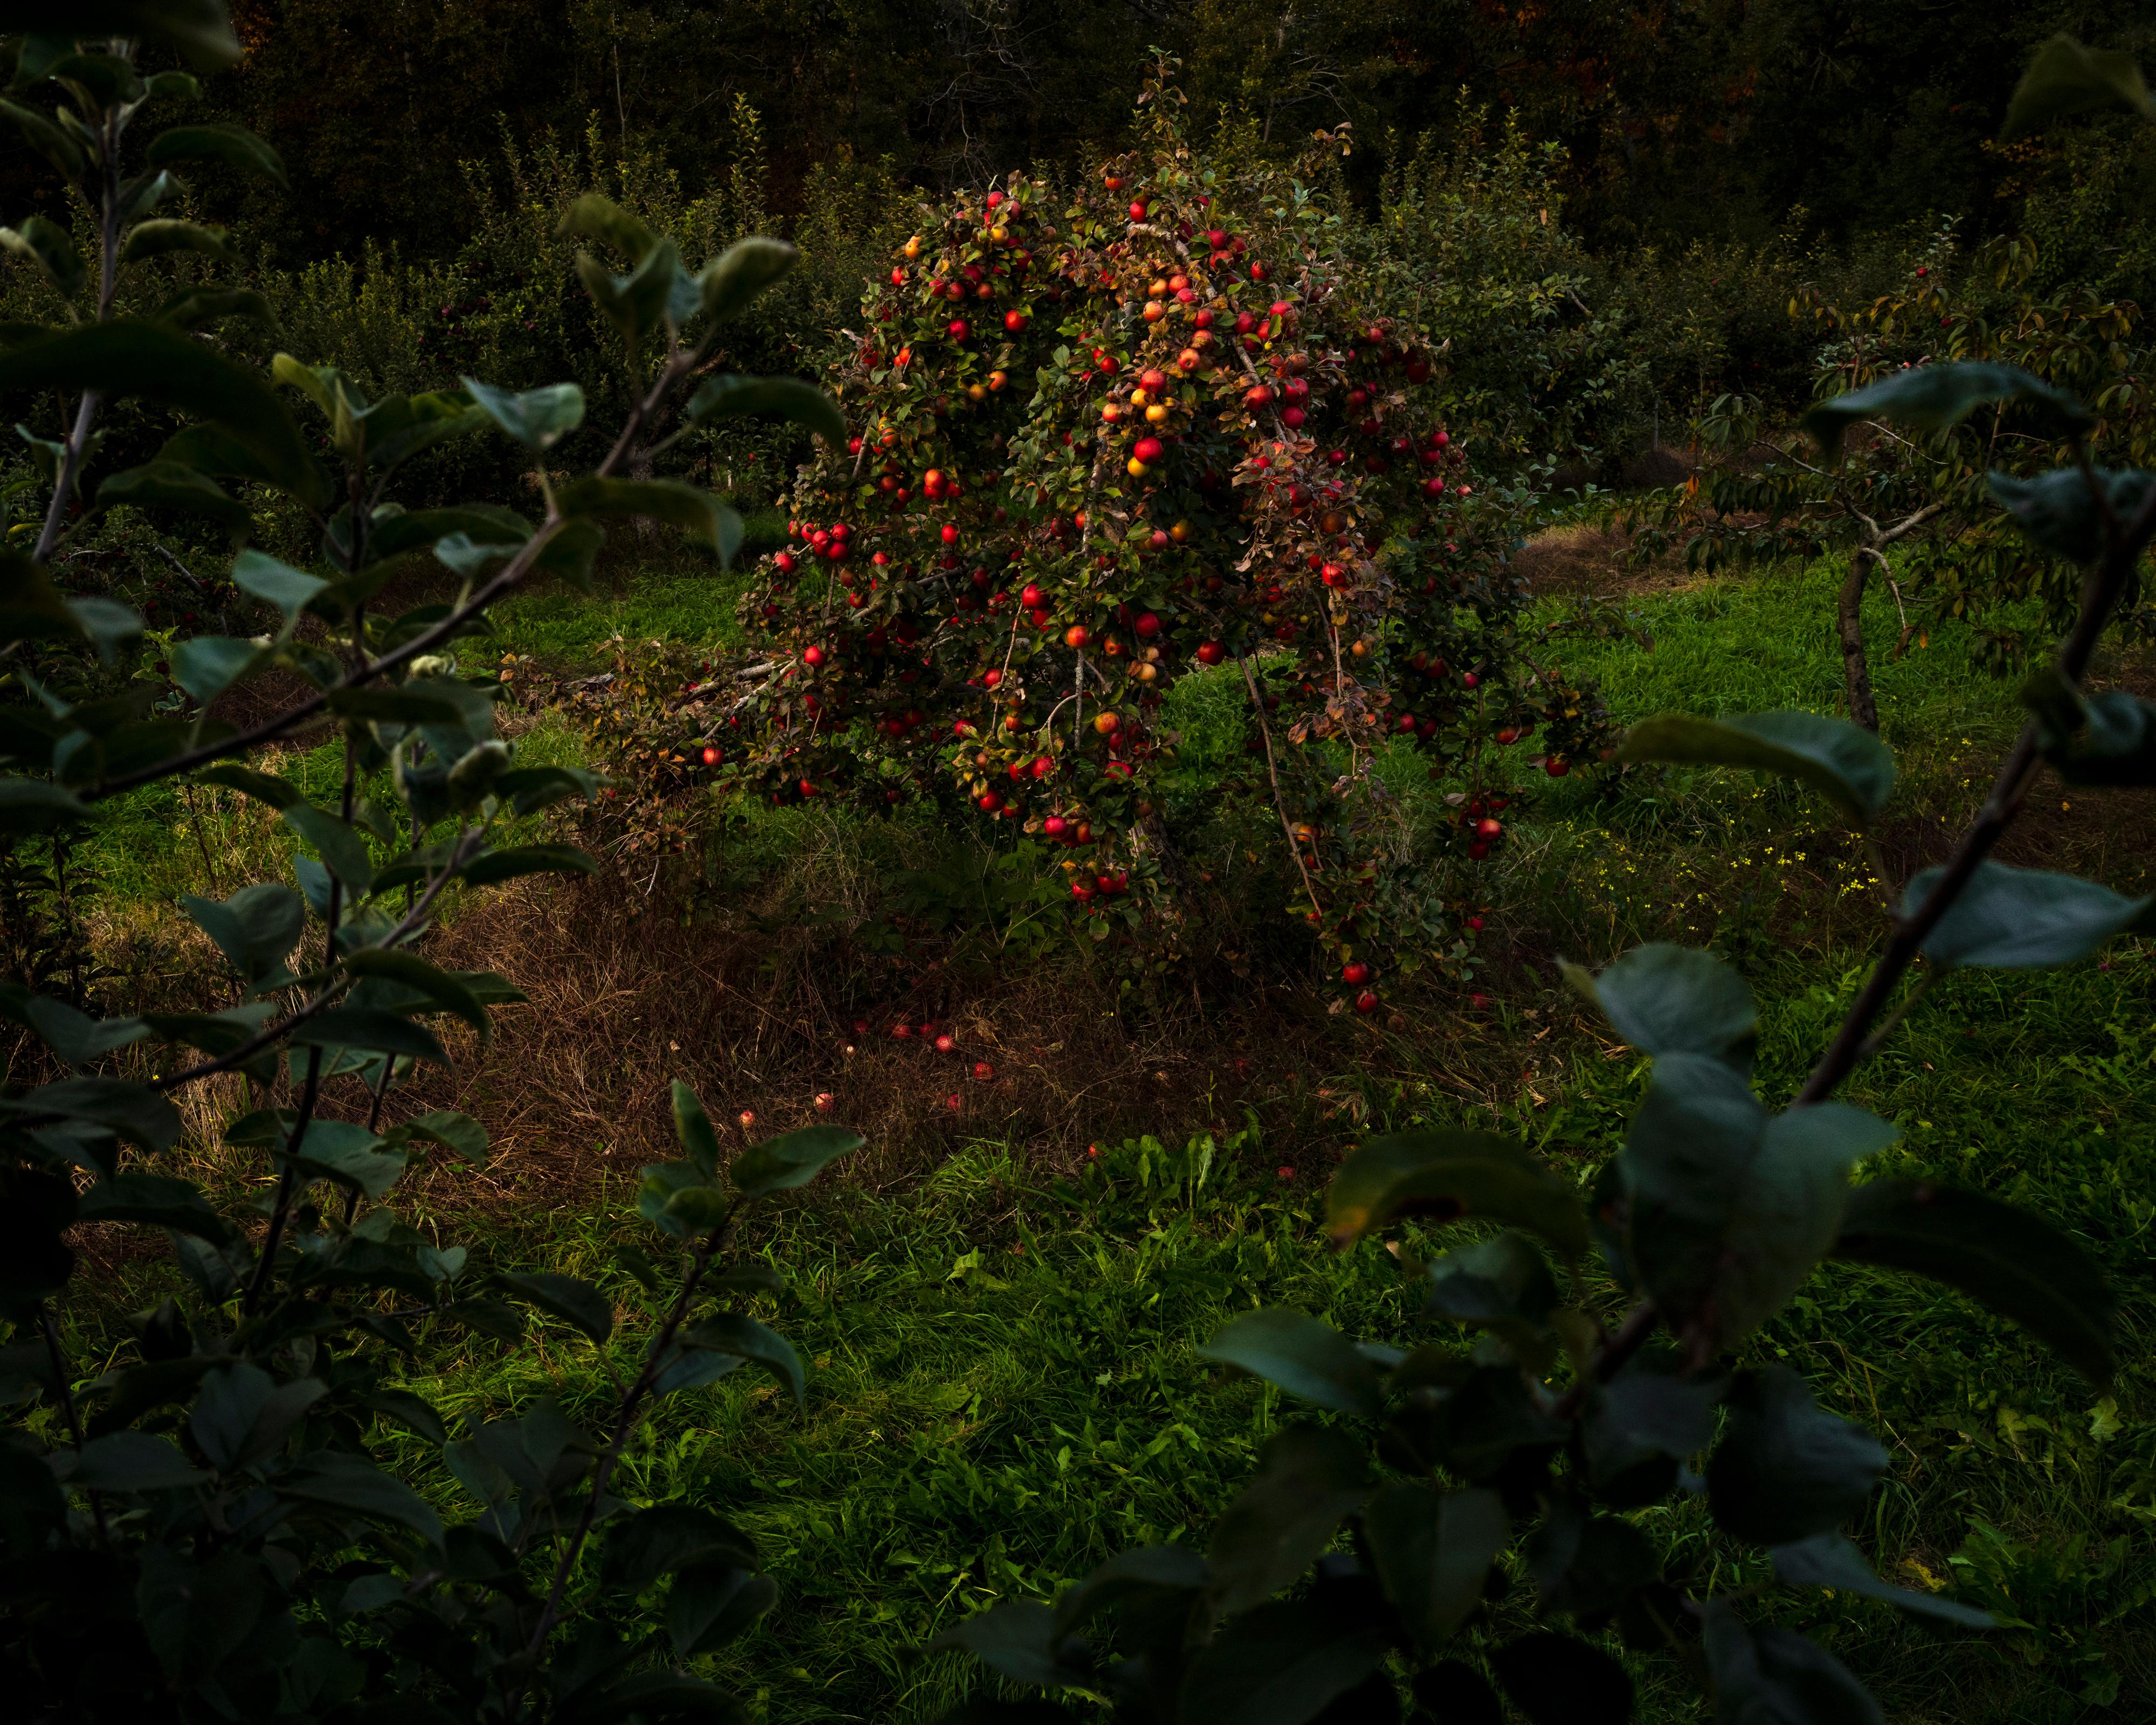 Cig Harvey Color Photograph - Apple Trees (Last Light), 2021